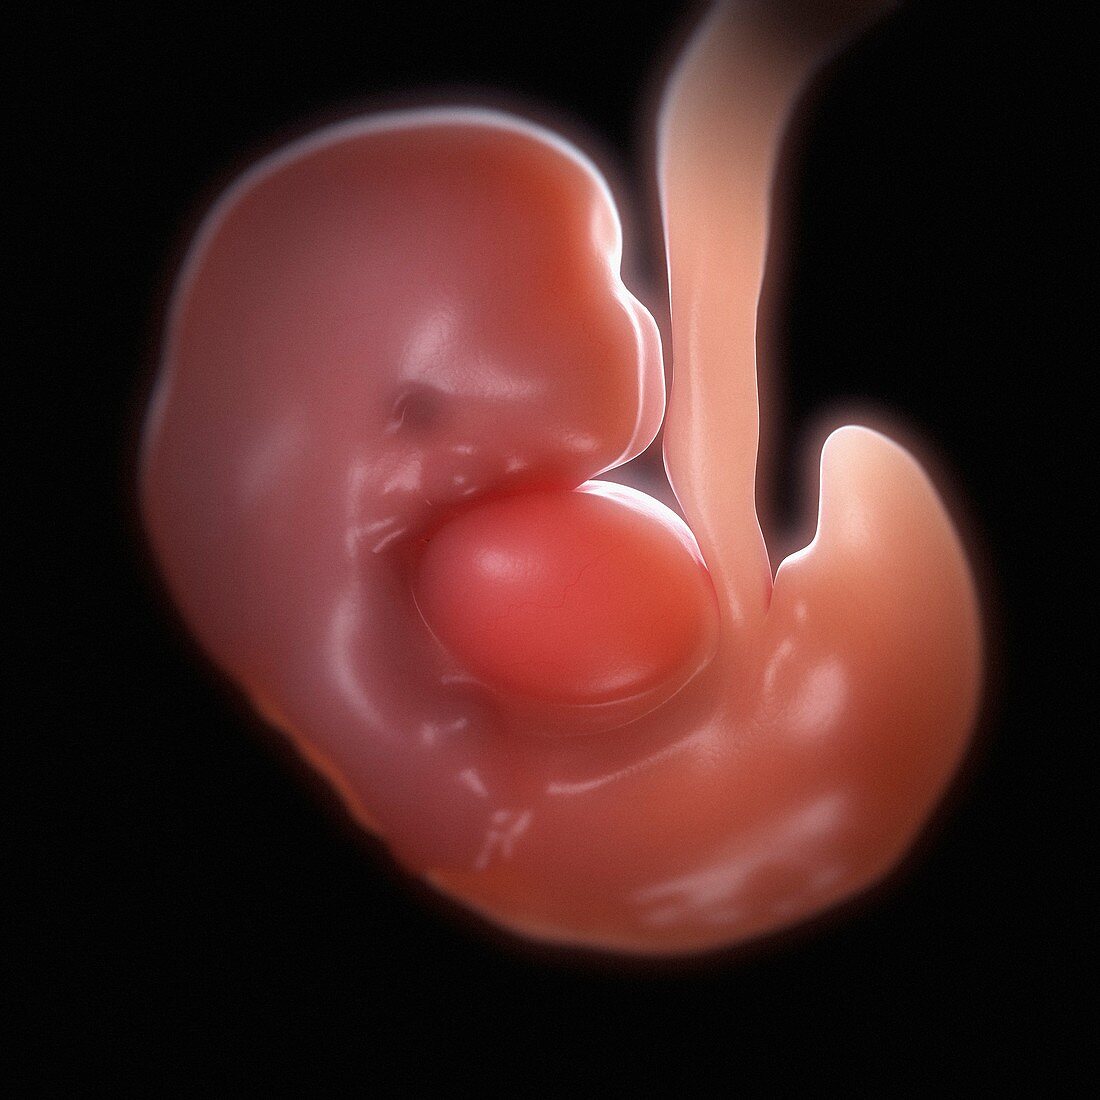 Developing Embryo, artwork